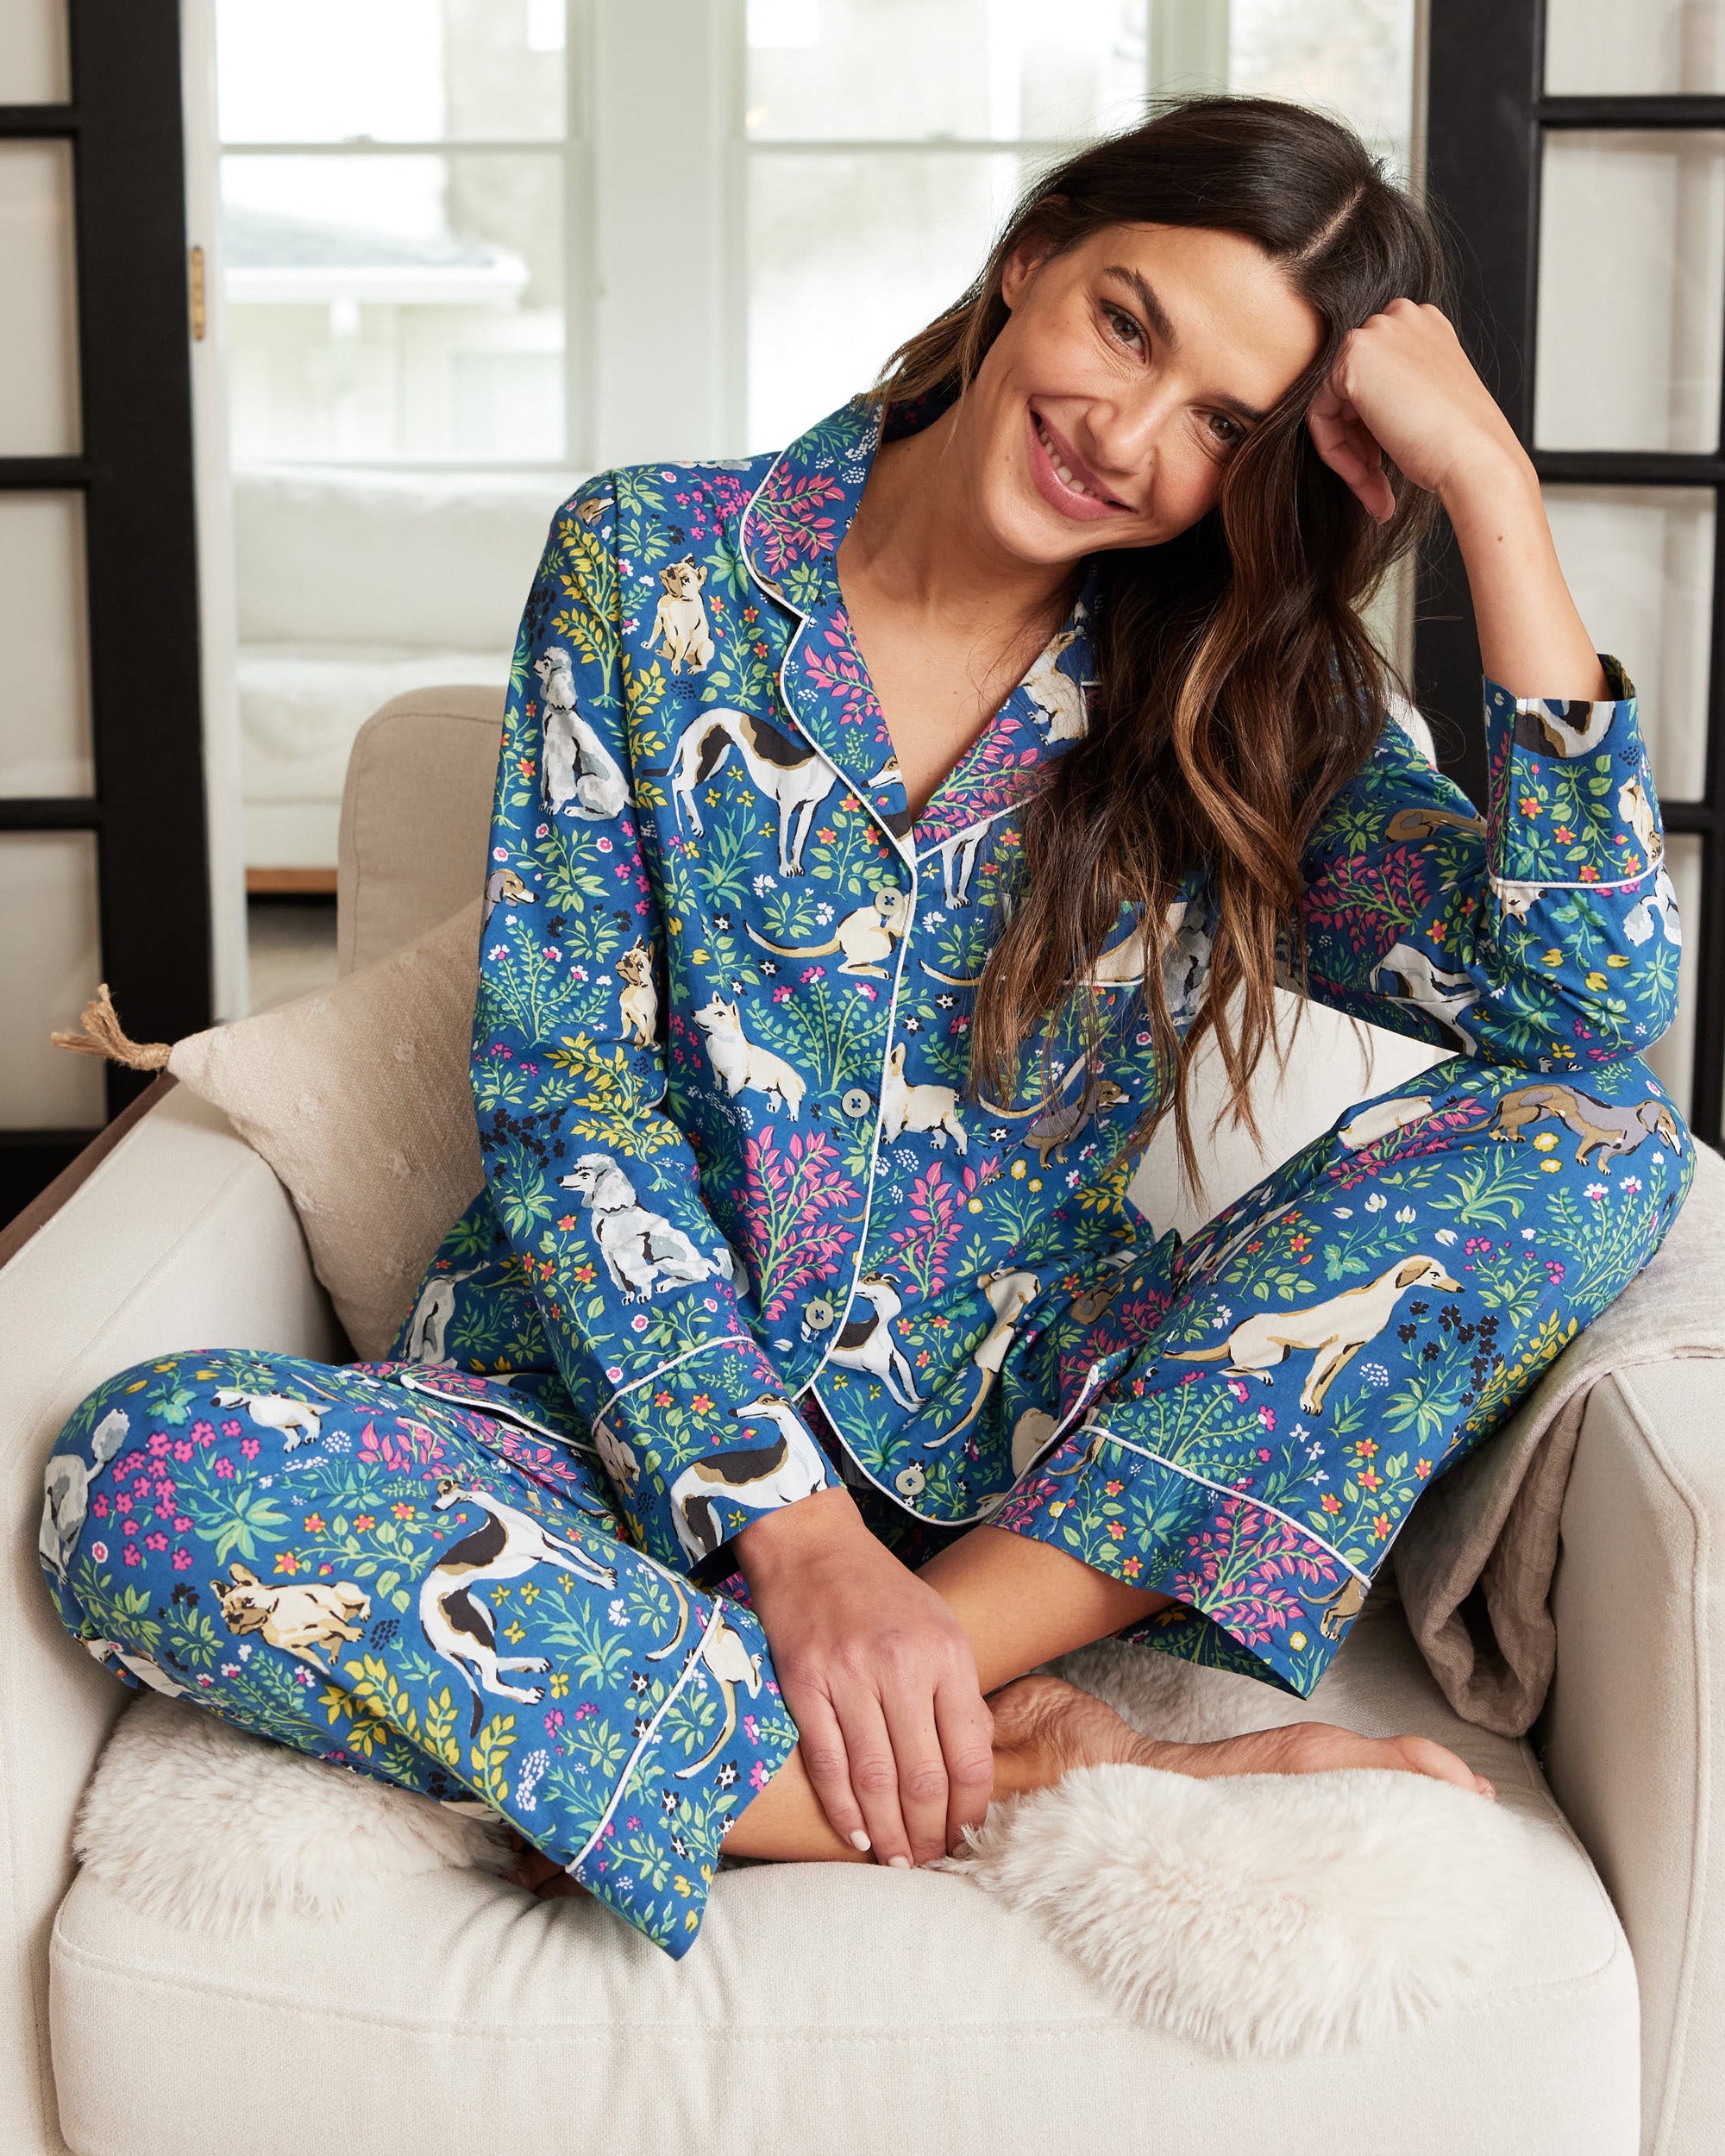 Nite Flite - Saturday fashion: the pyjama look😎 Stay in, stay